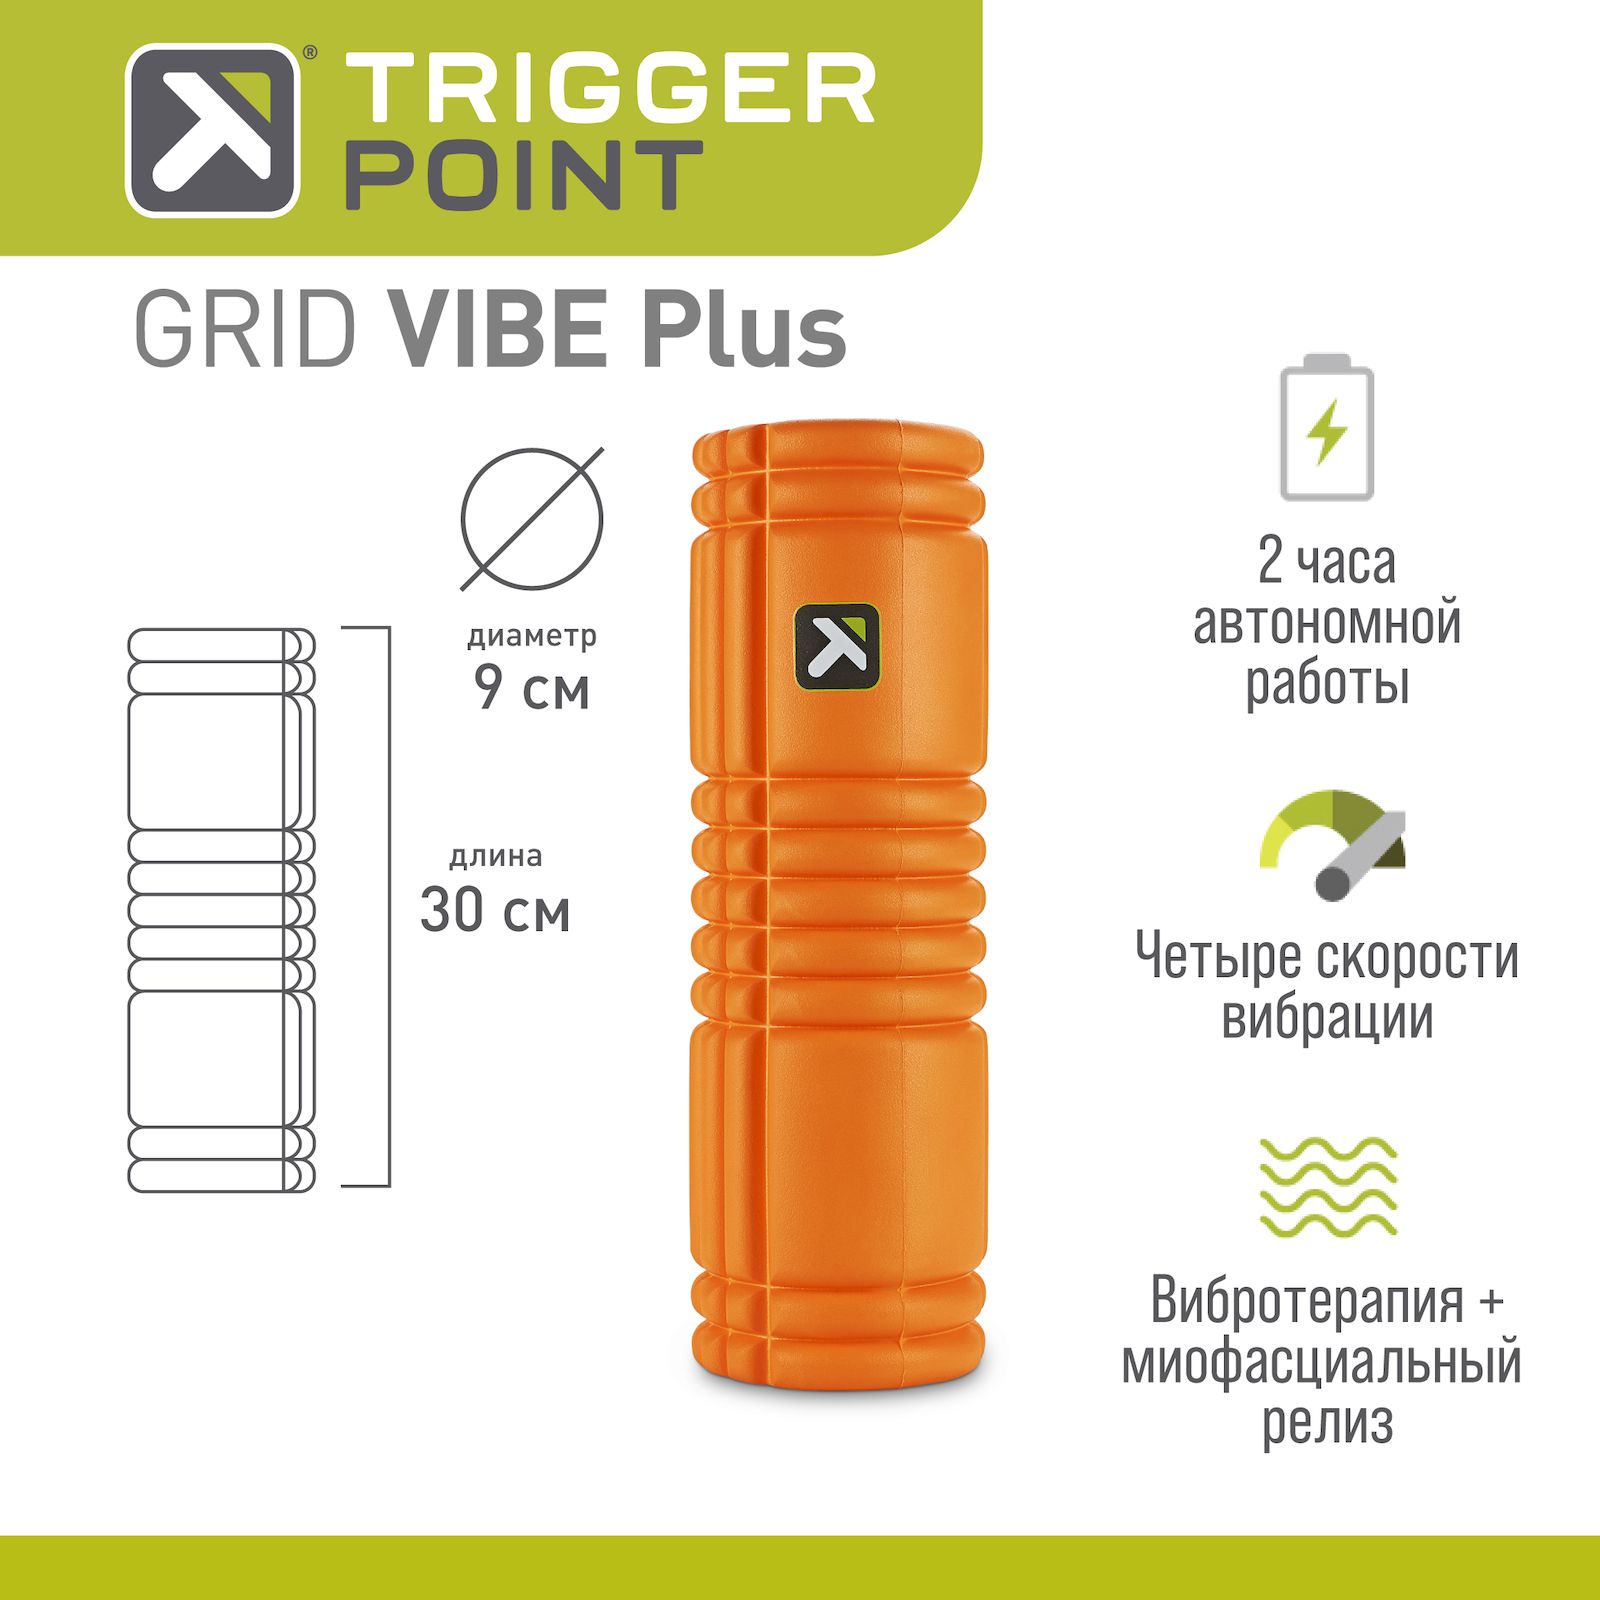 Ролик с массажным покрытием Trigger Point GRID VIBE Plus 1200 г, 30,5 x 9 см, оранжевый